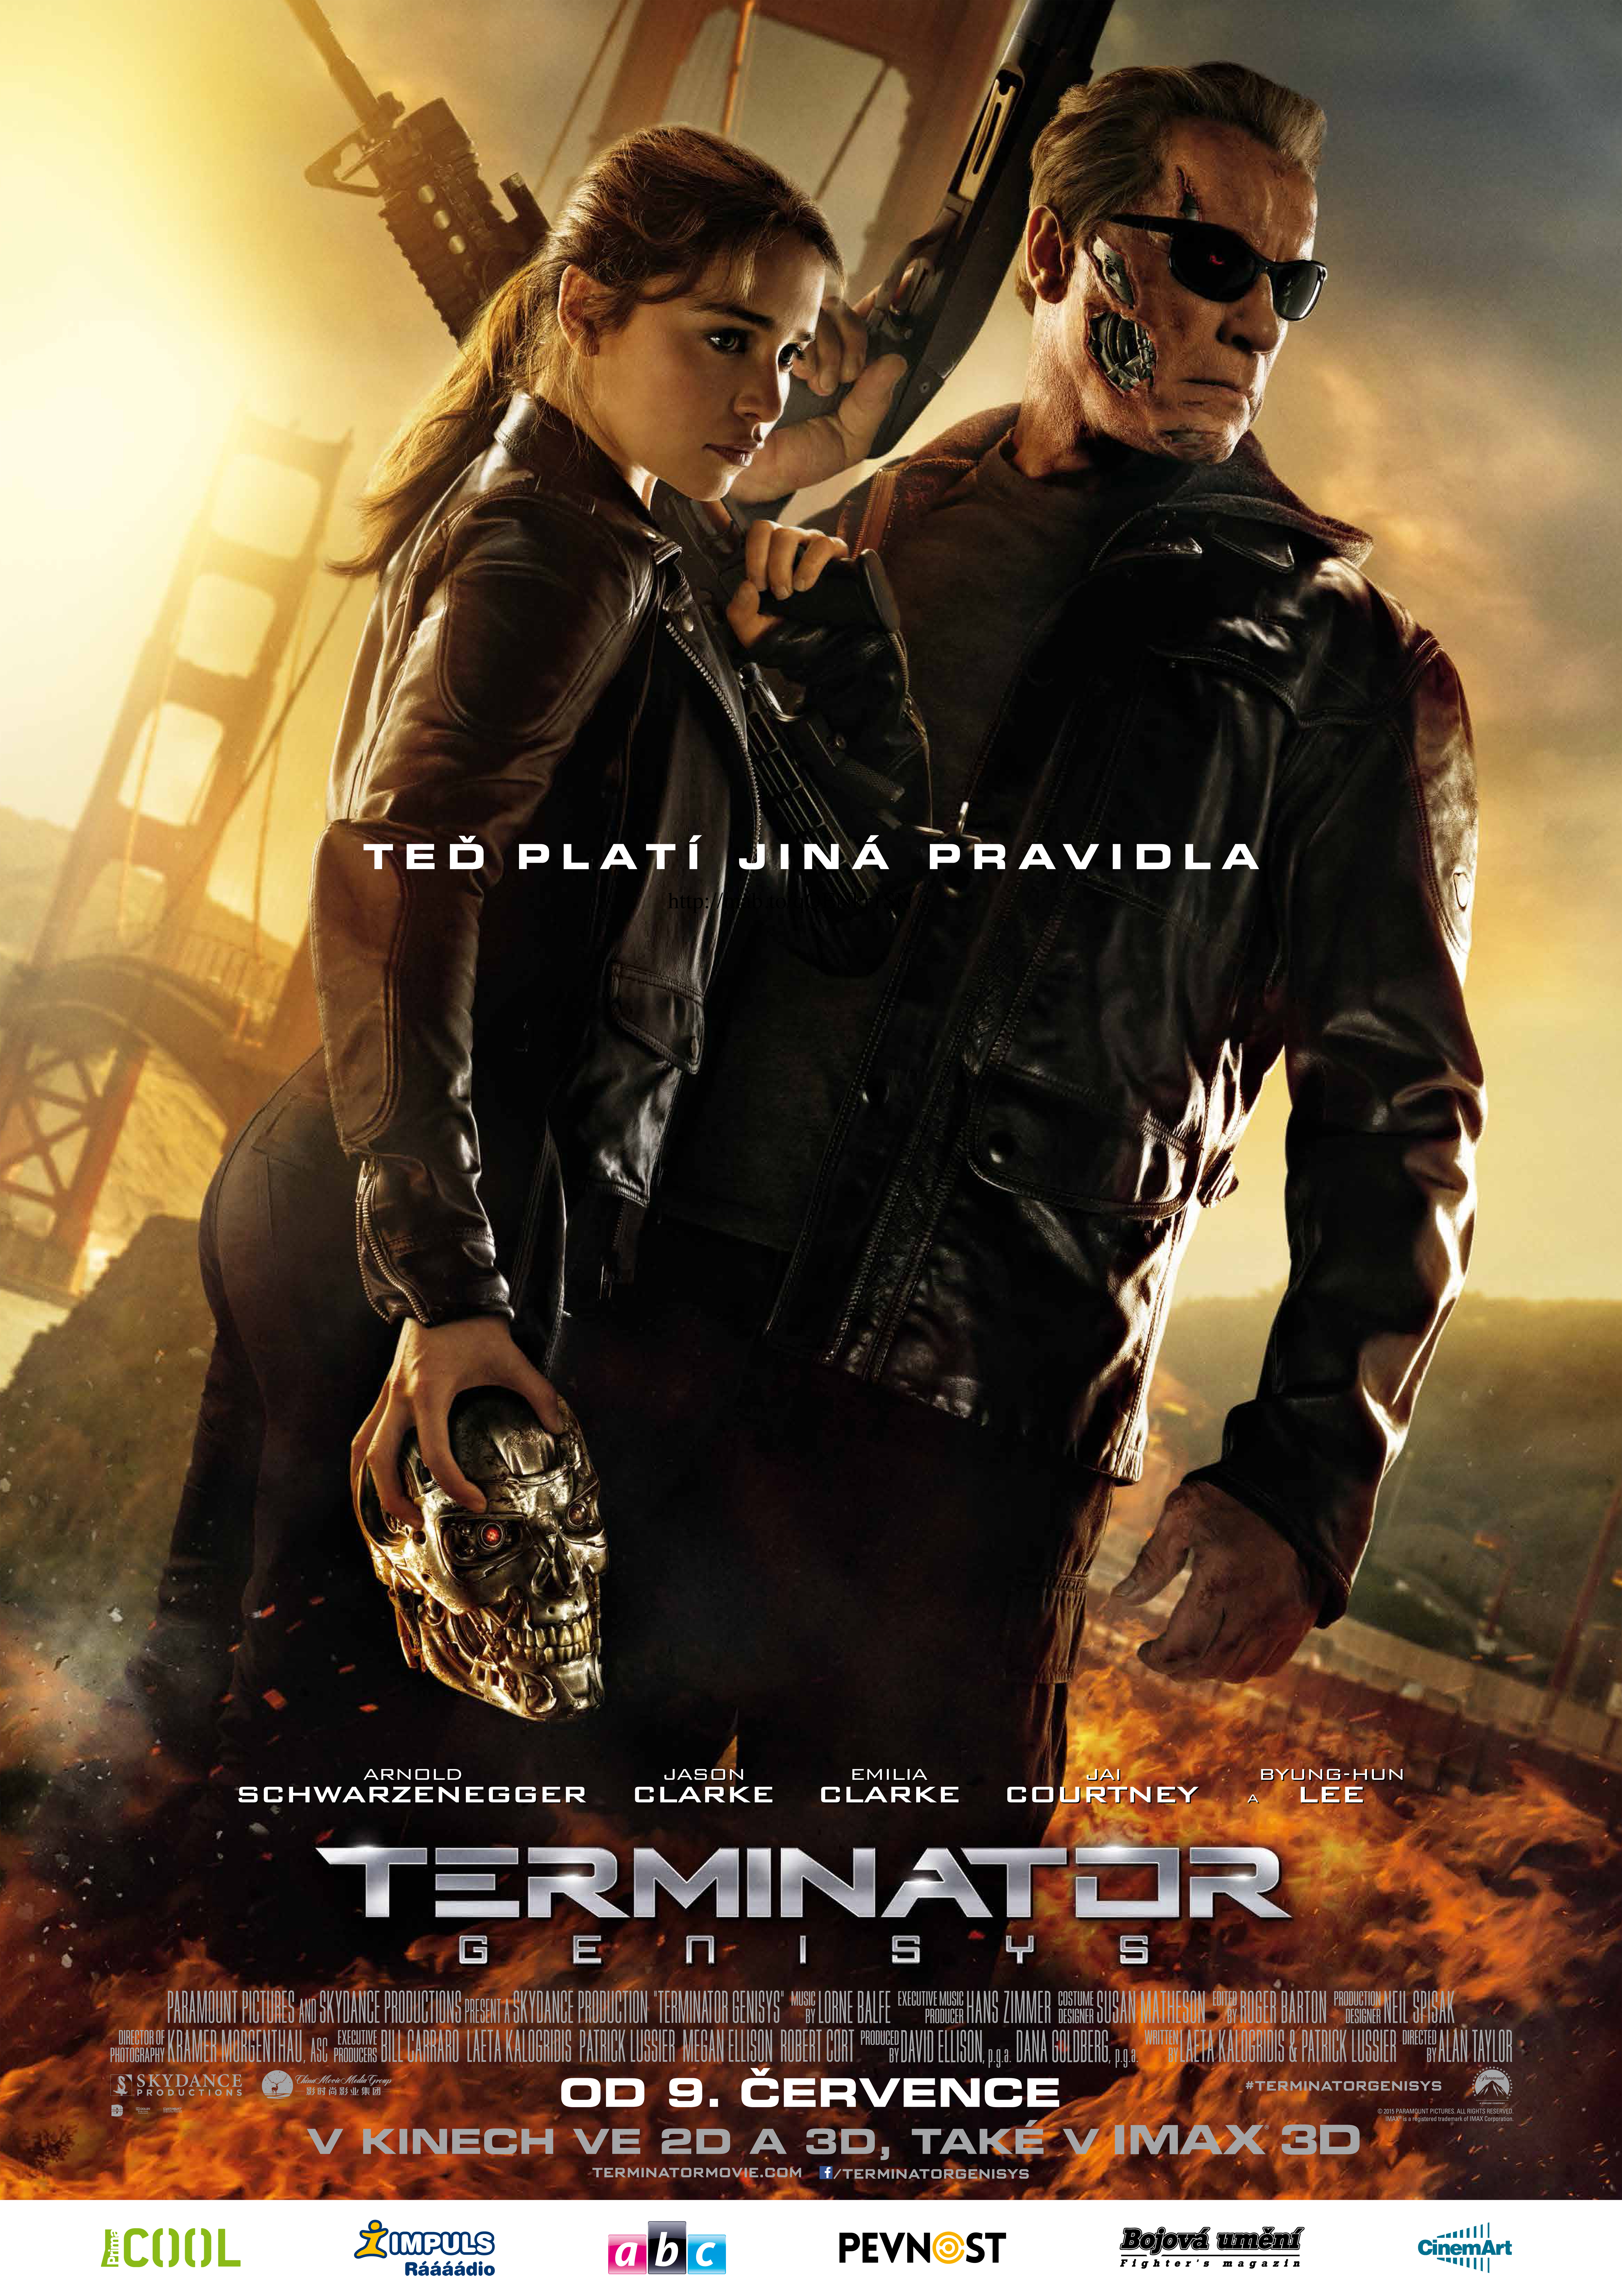 Re: Terminator Genisys (2015)